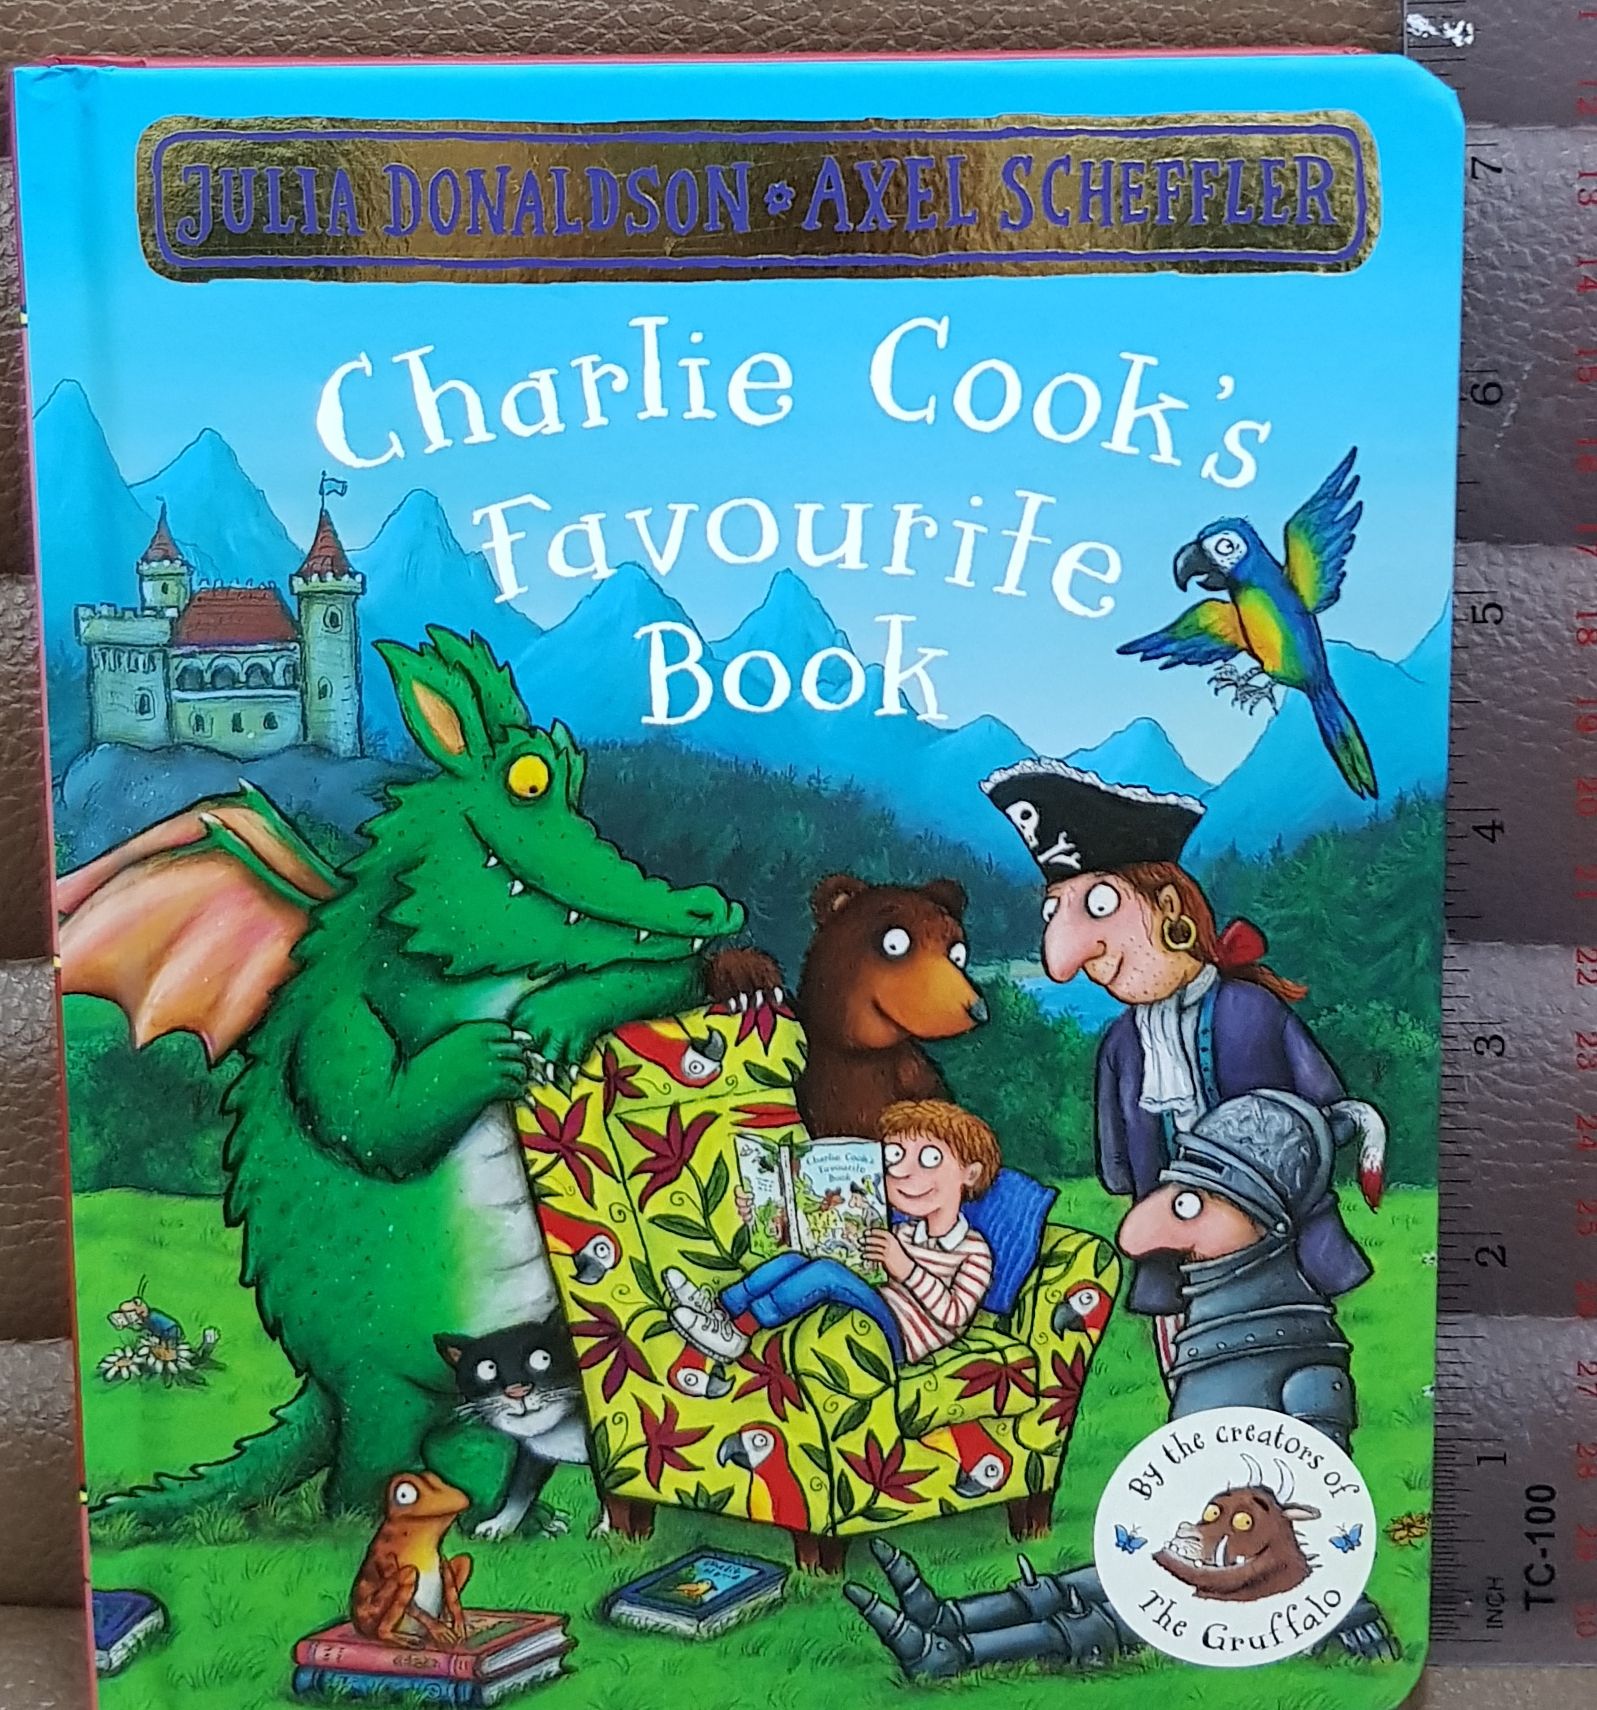 Charlie Cook Favorite book  By Julia Donaldson ของแท้นำเข้าจากประเทศอังกฤษ กระดาษแข็งหนาทุกหน้า